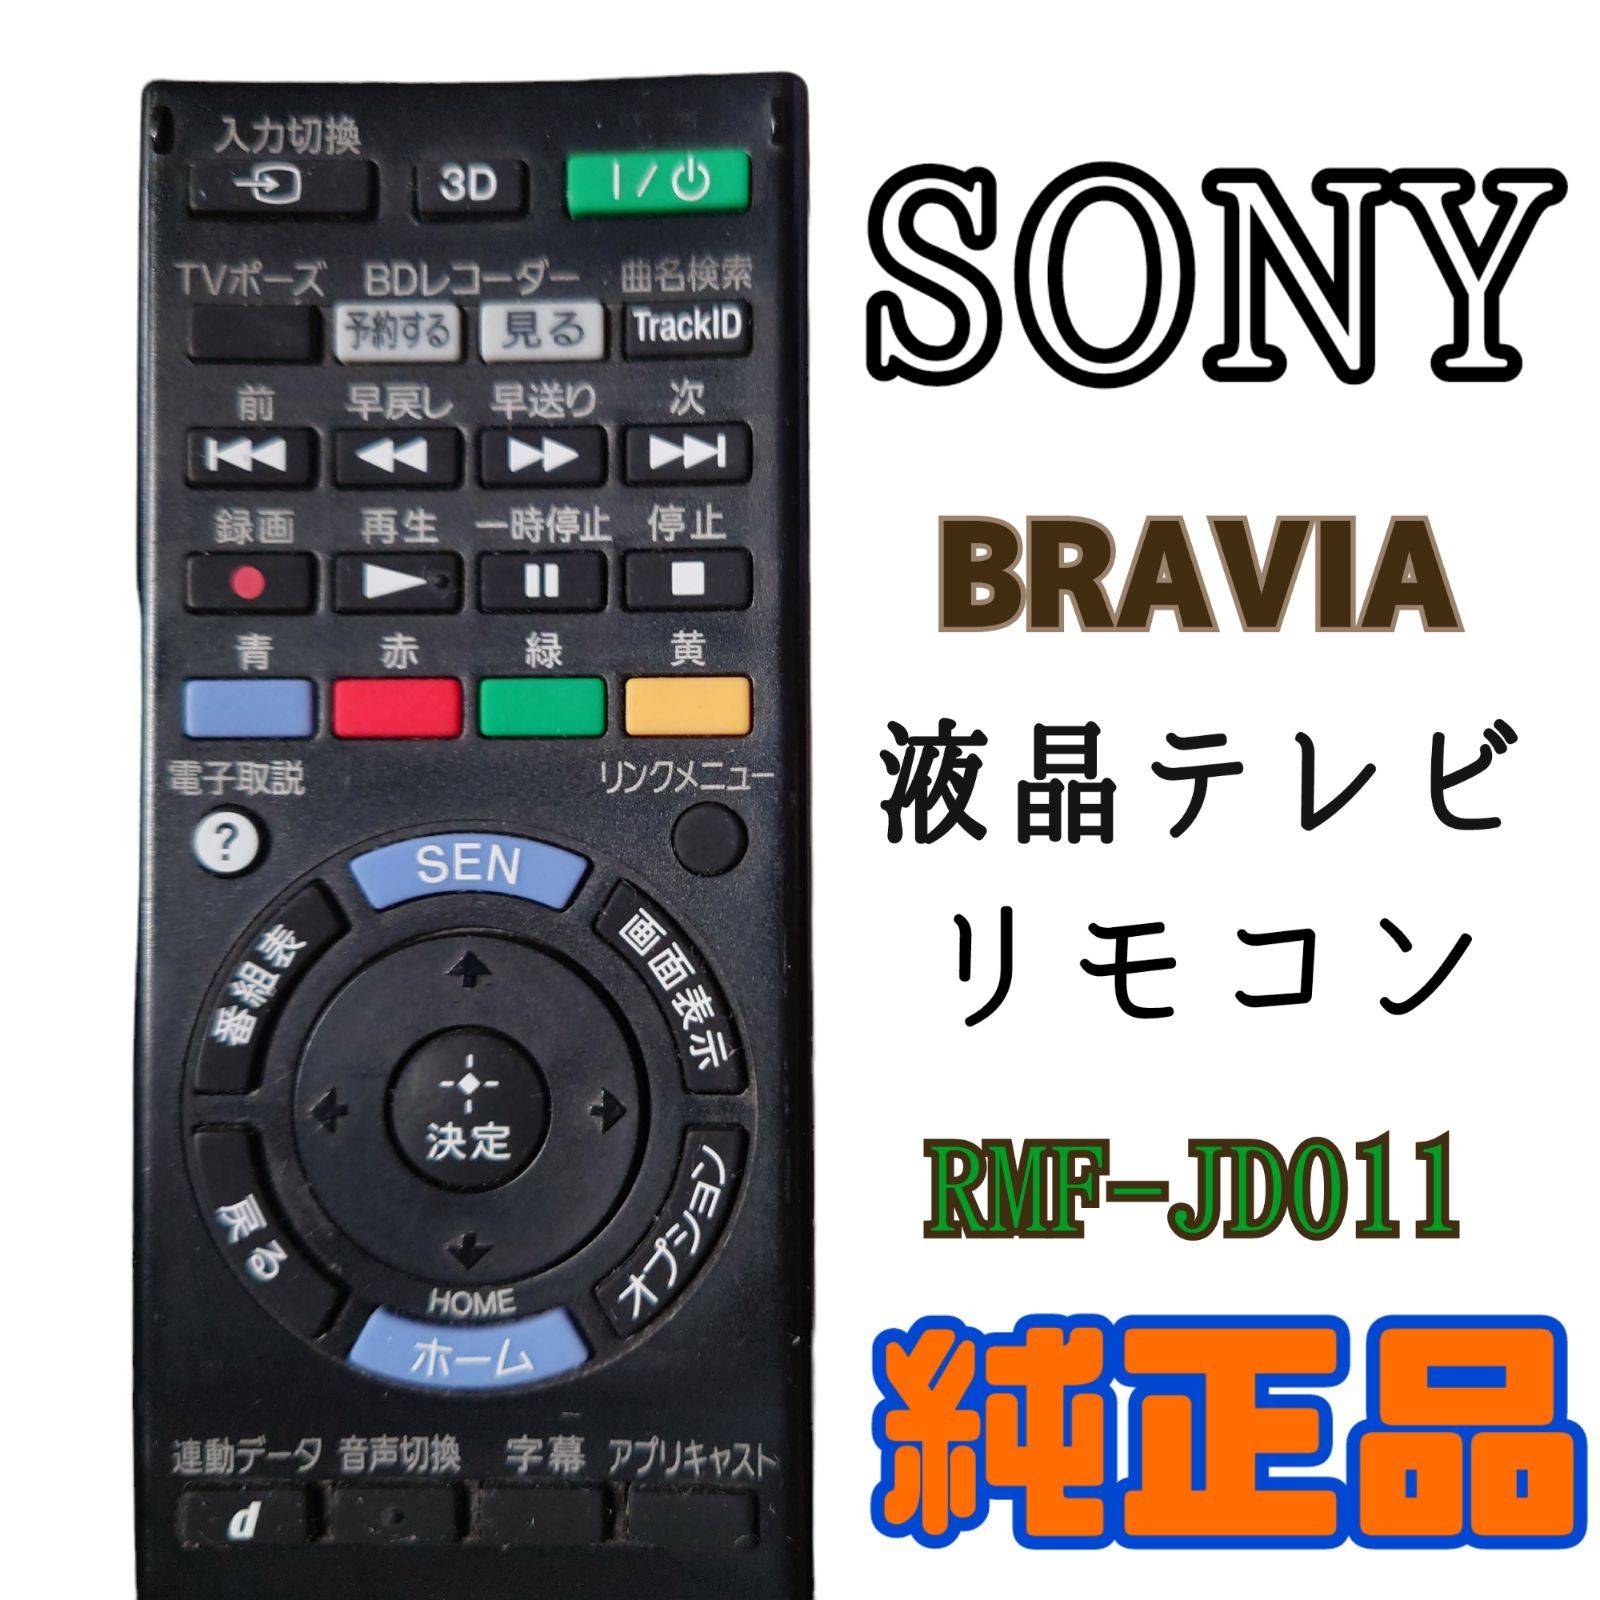 SONY 純正テレビリモコン RM-JD011 - 1